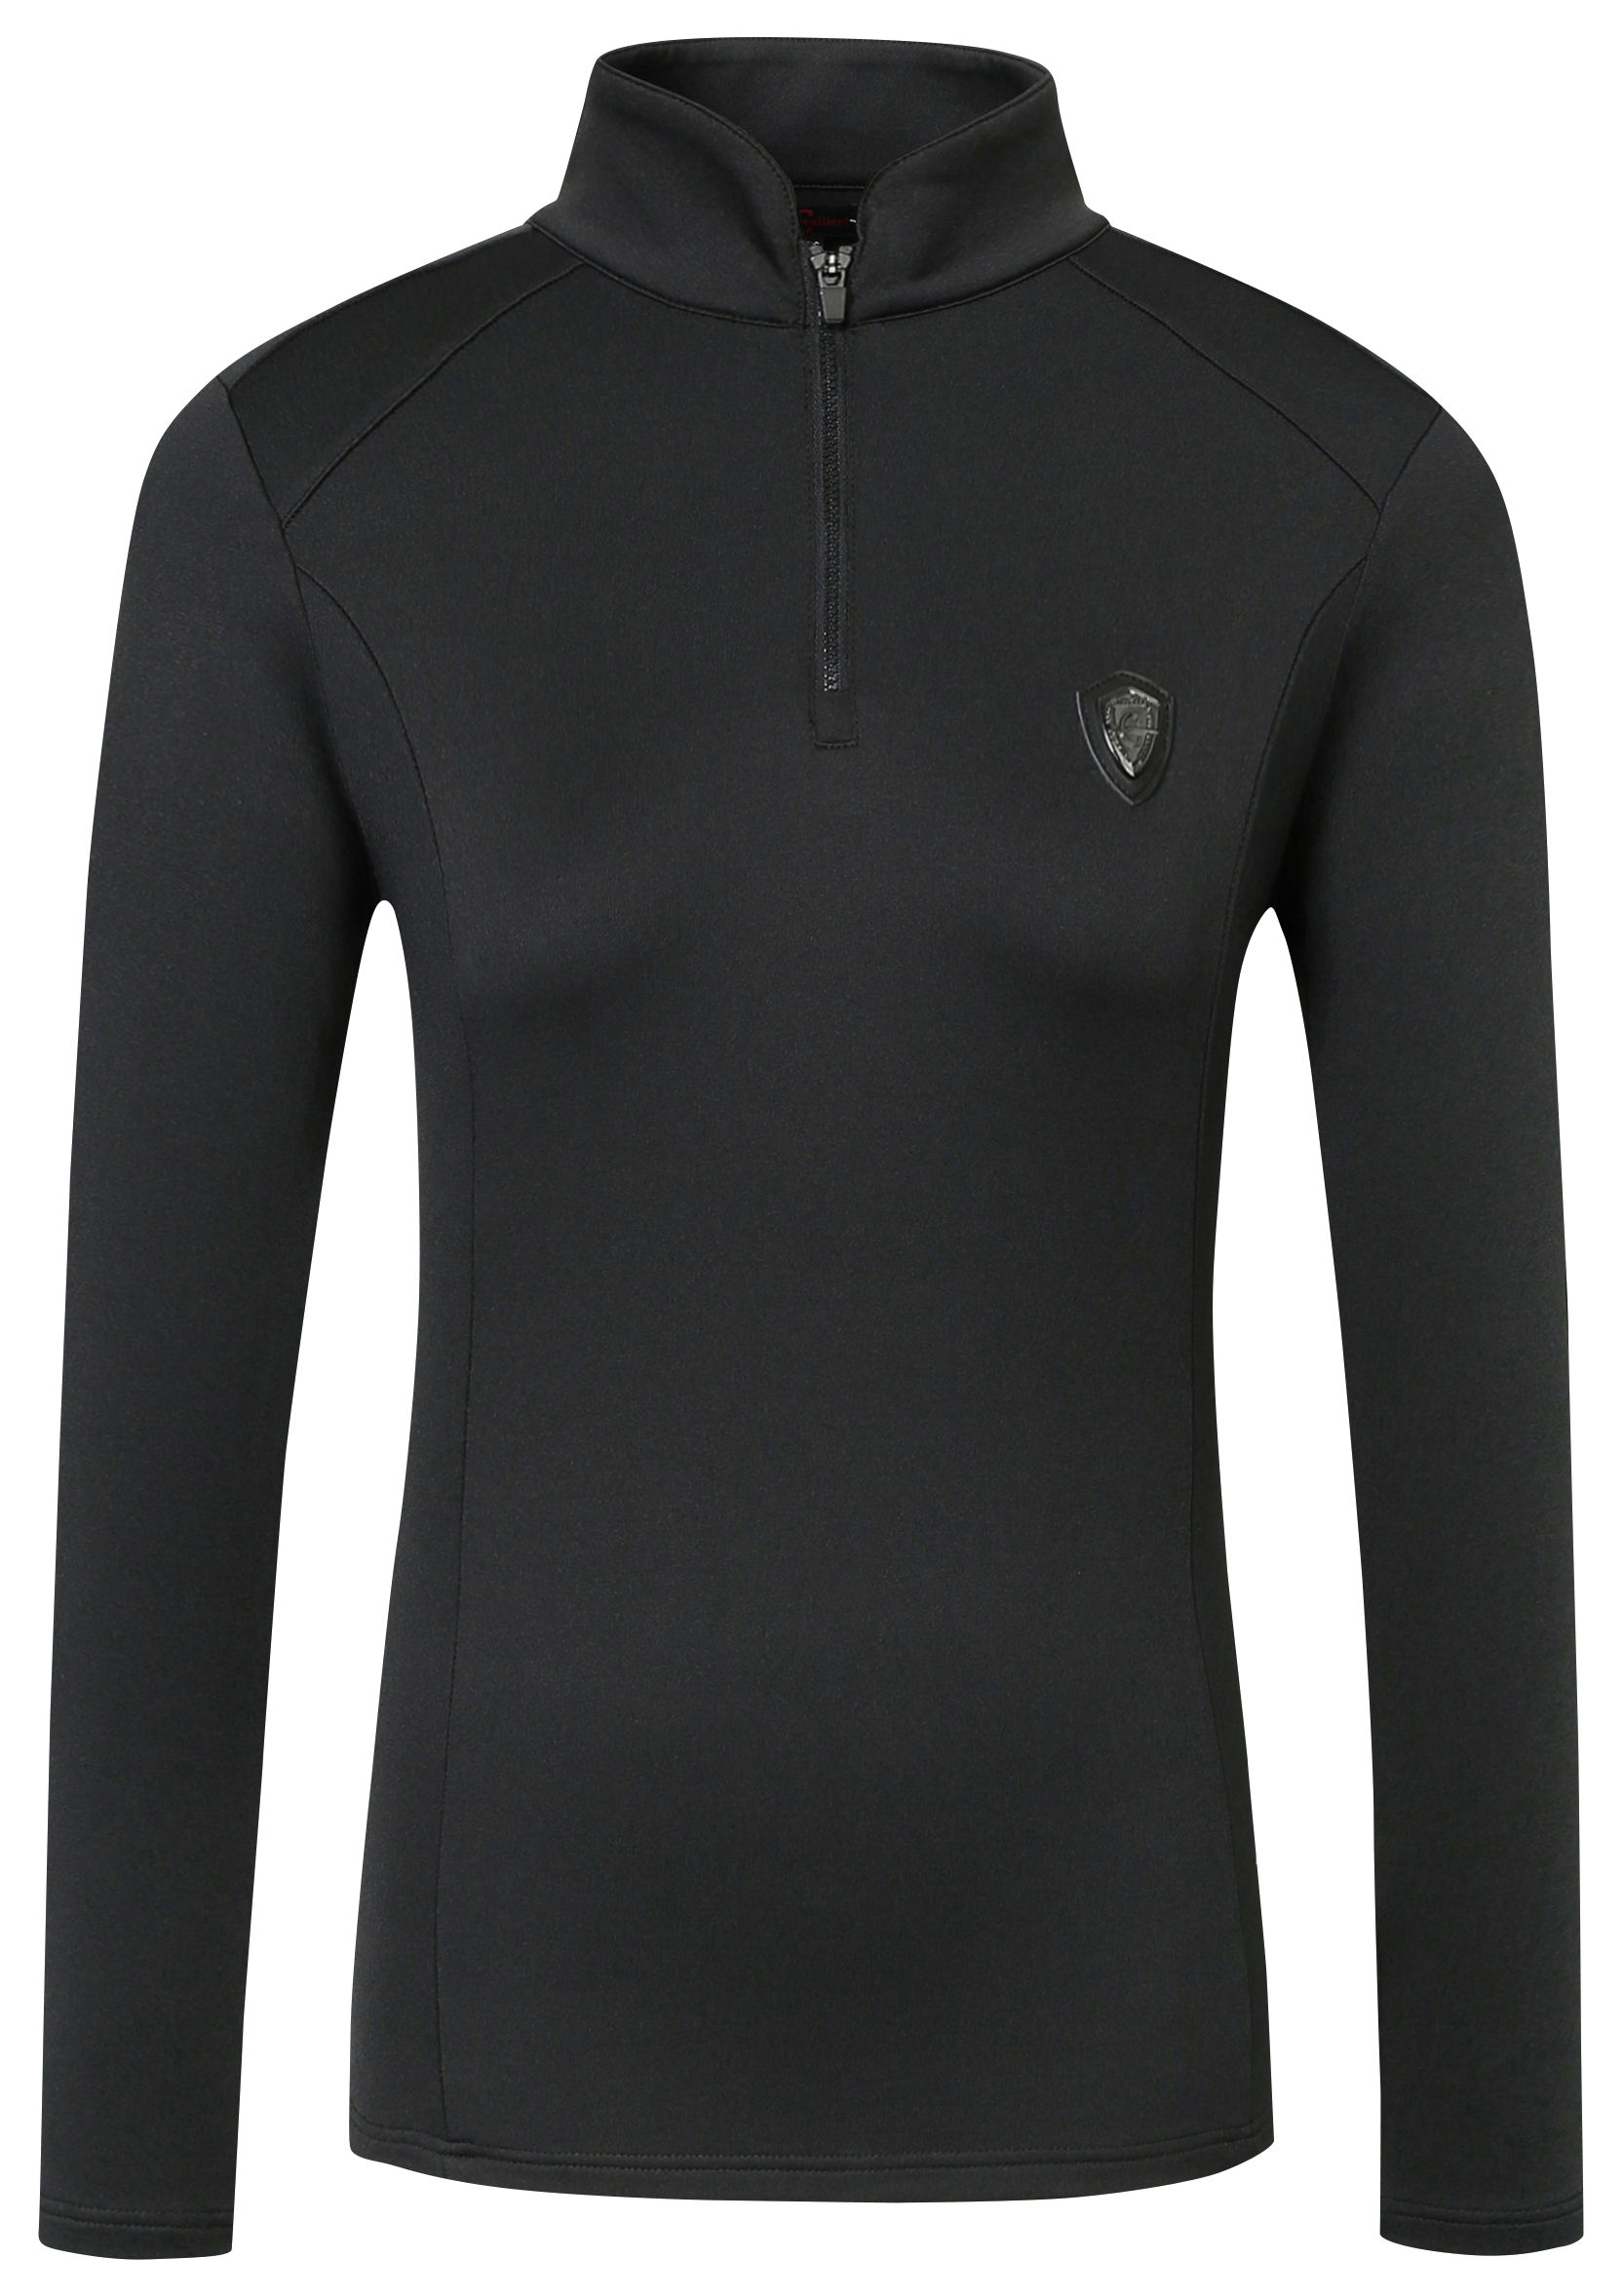 Covalliero Damen Langarm Active Shirt Trainingsshirt - schwarz - XS - 1